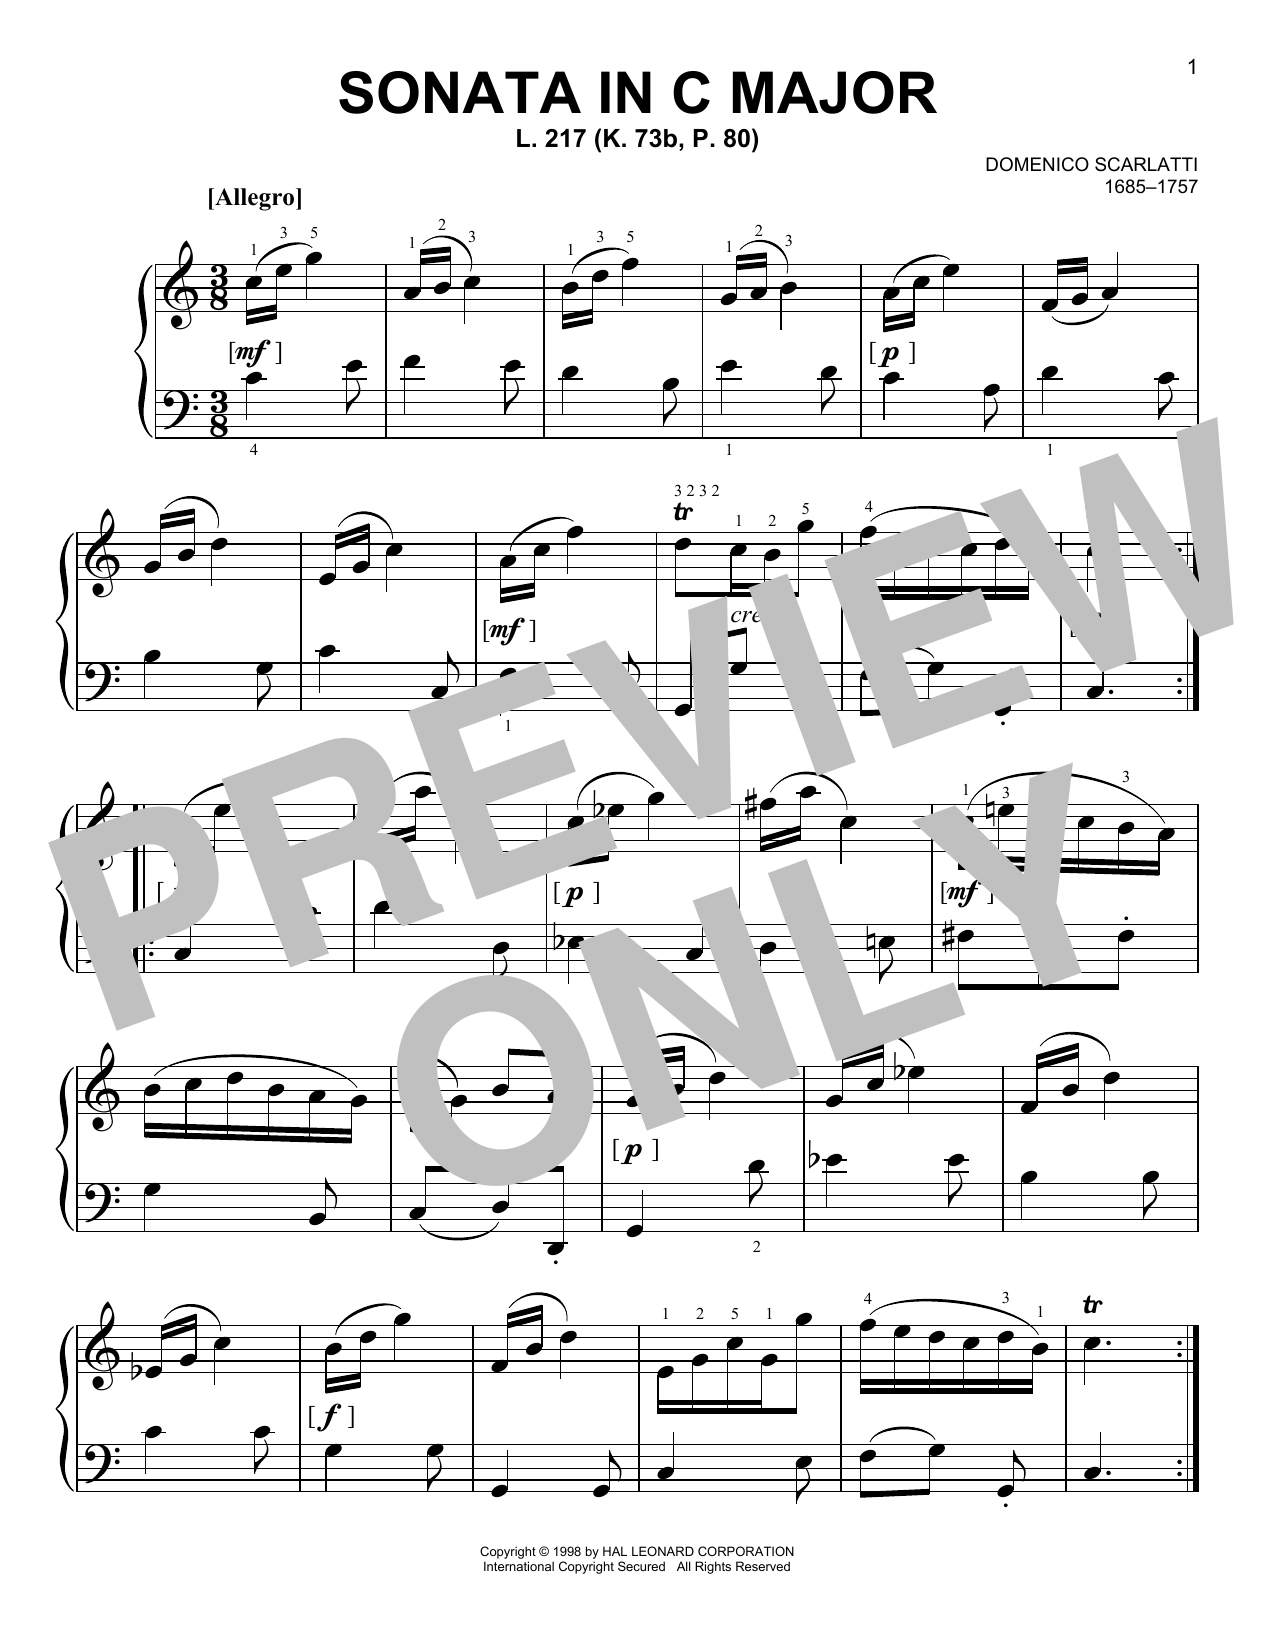 Download Domenico Scarlatti Sonata In C Major, L. 217 Sheet Music and learn how to play Easy Piano PDF digital score in minutes